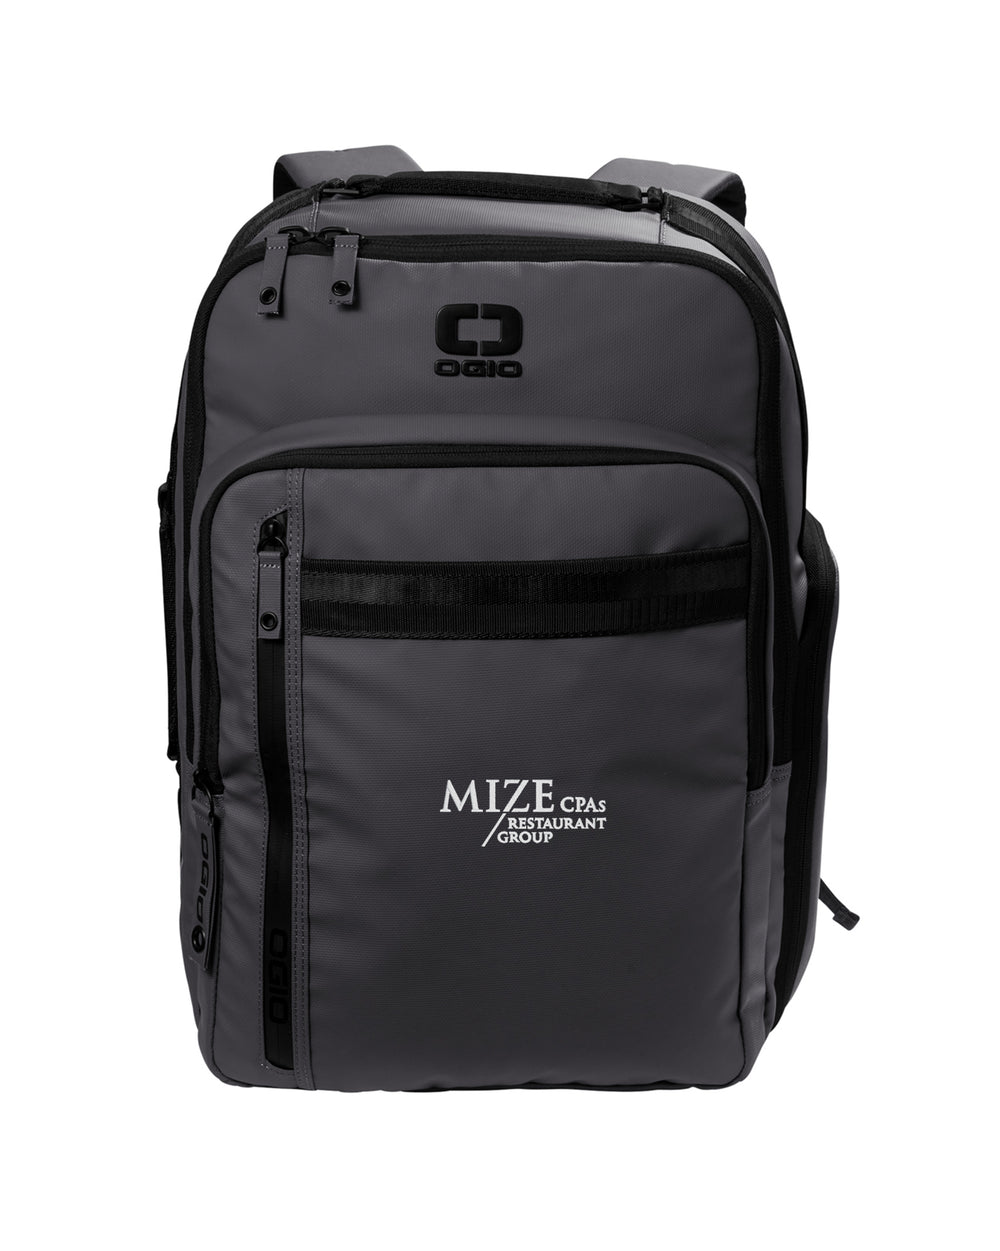 Mize Restaurant Group - OGIO Commuter XL Pack - 91012